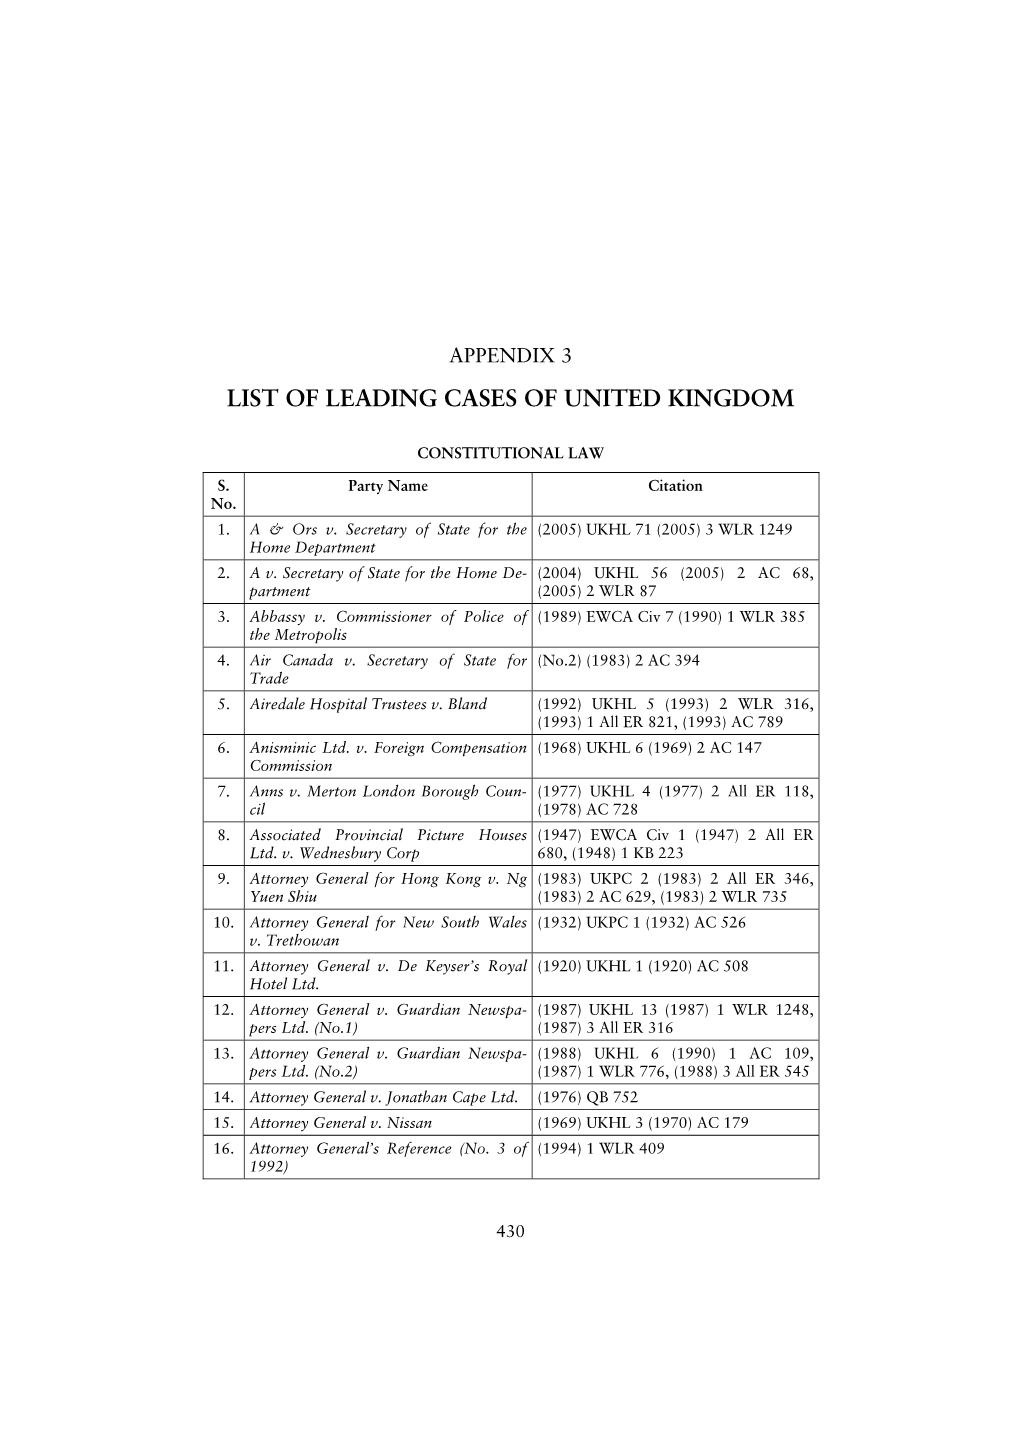 List of Leading Cases of United Kingdom